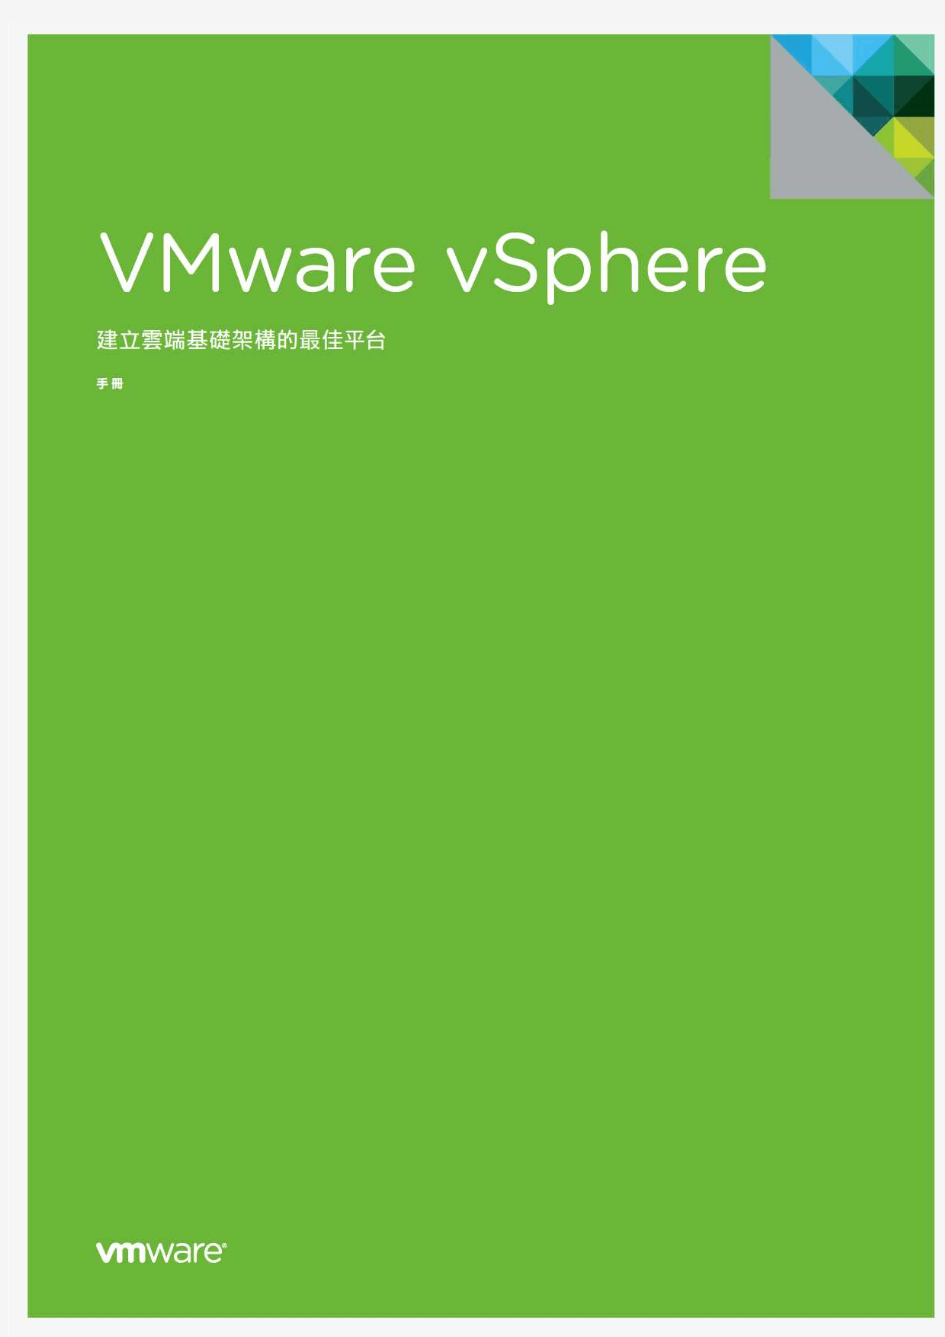 VMwarevSphere建立云端基础架构的最佳平台